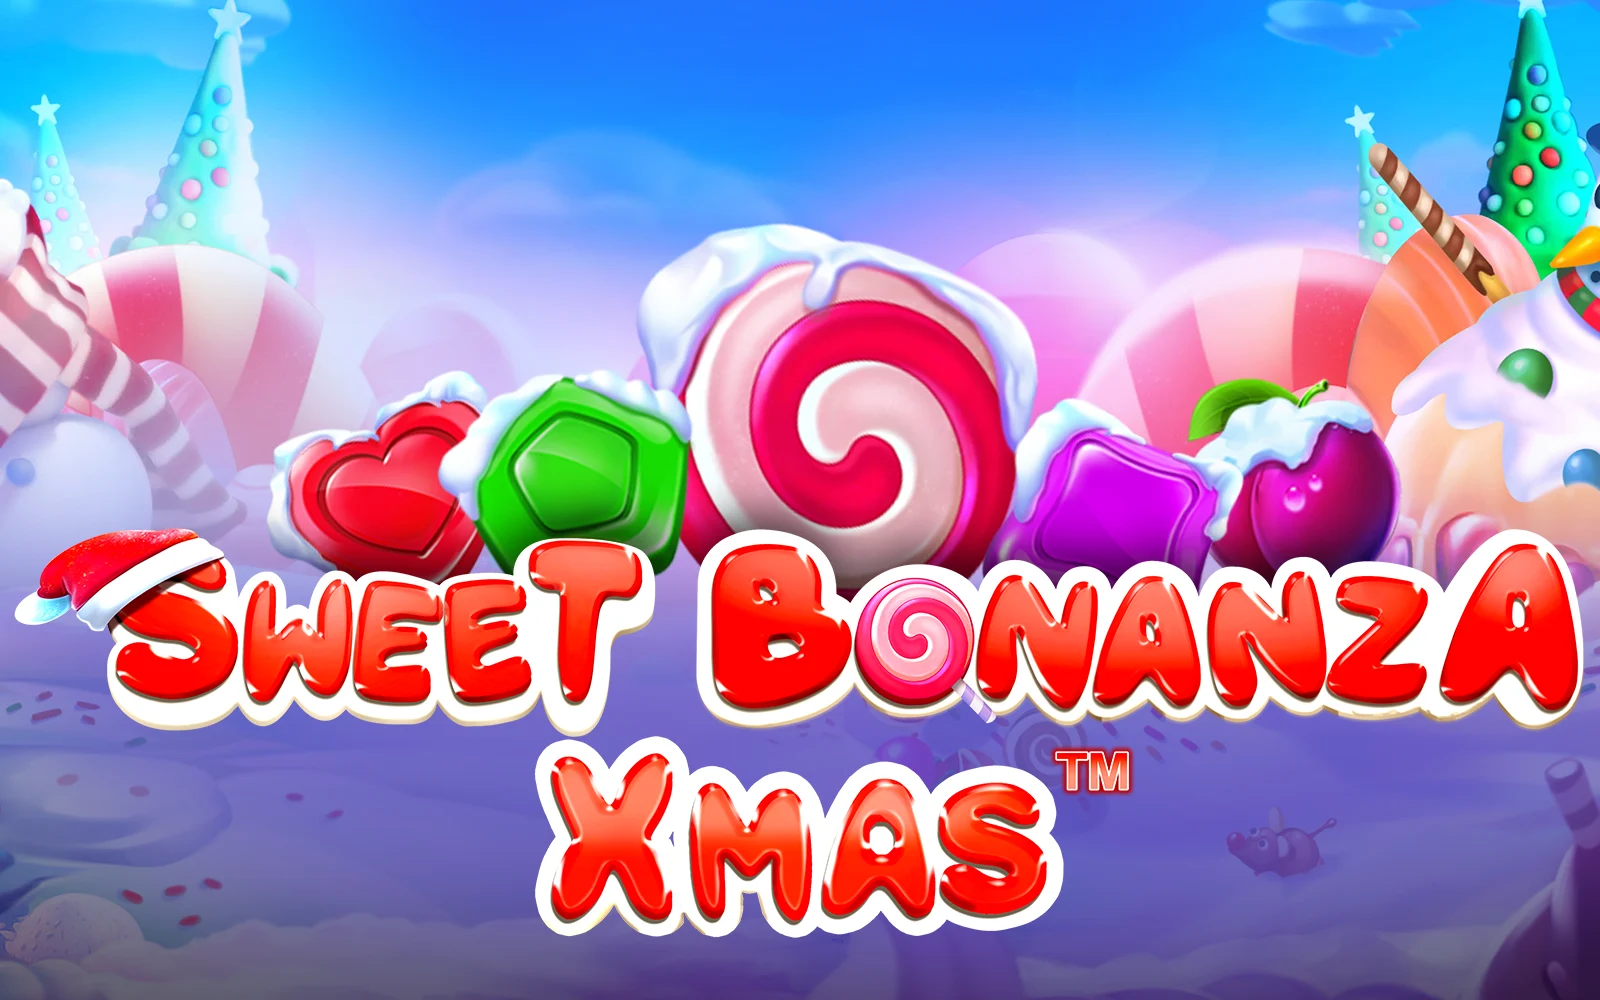 Spil Sweet Bonanza Xmas™ på Starcasino.be online kasino
